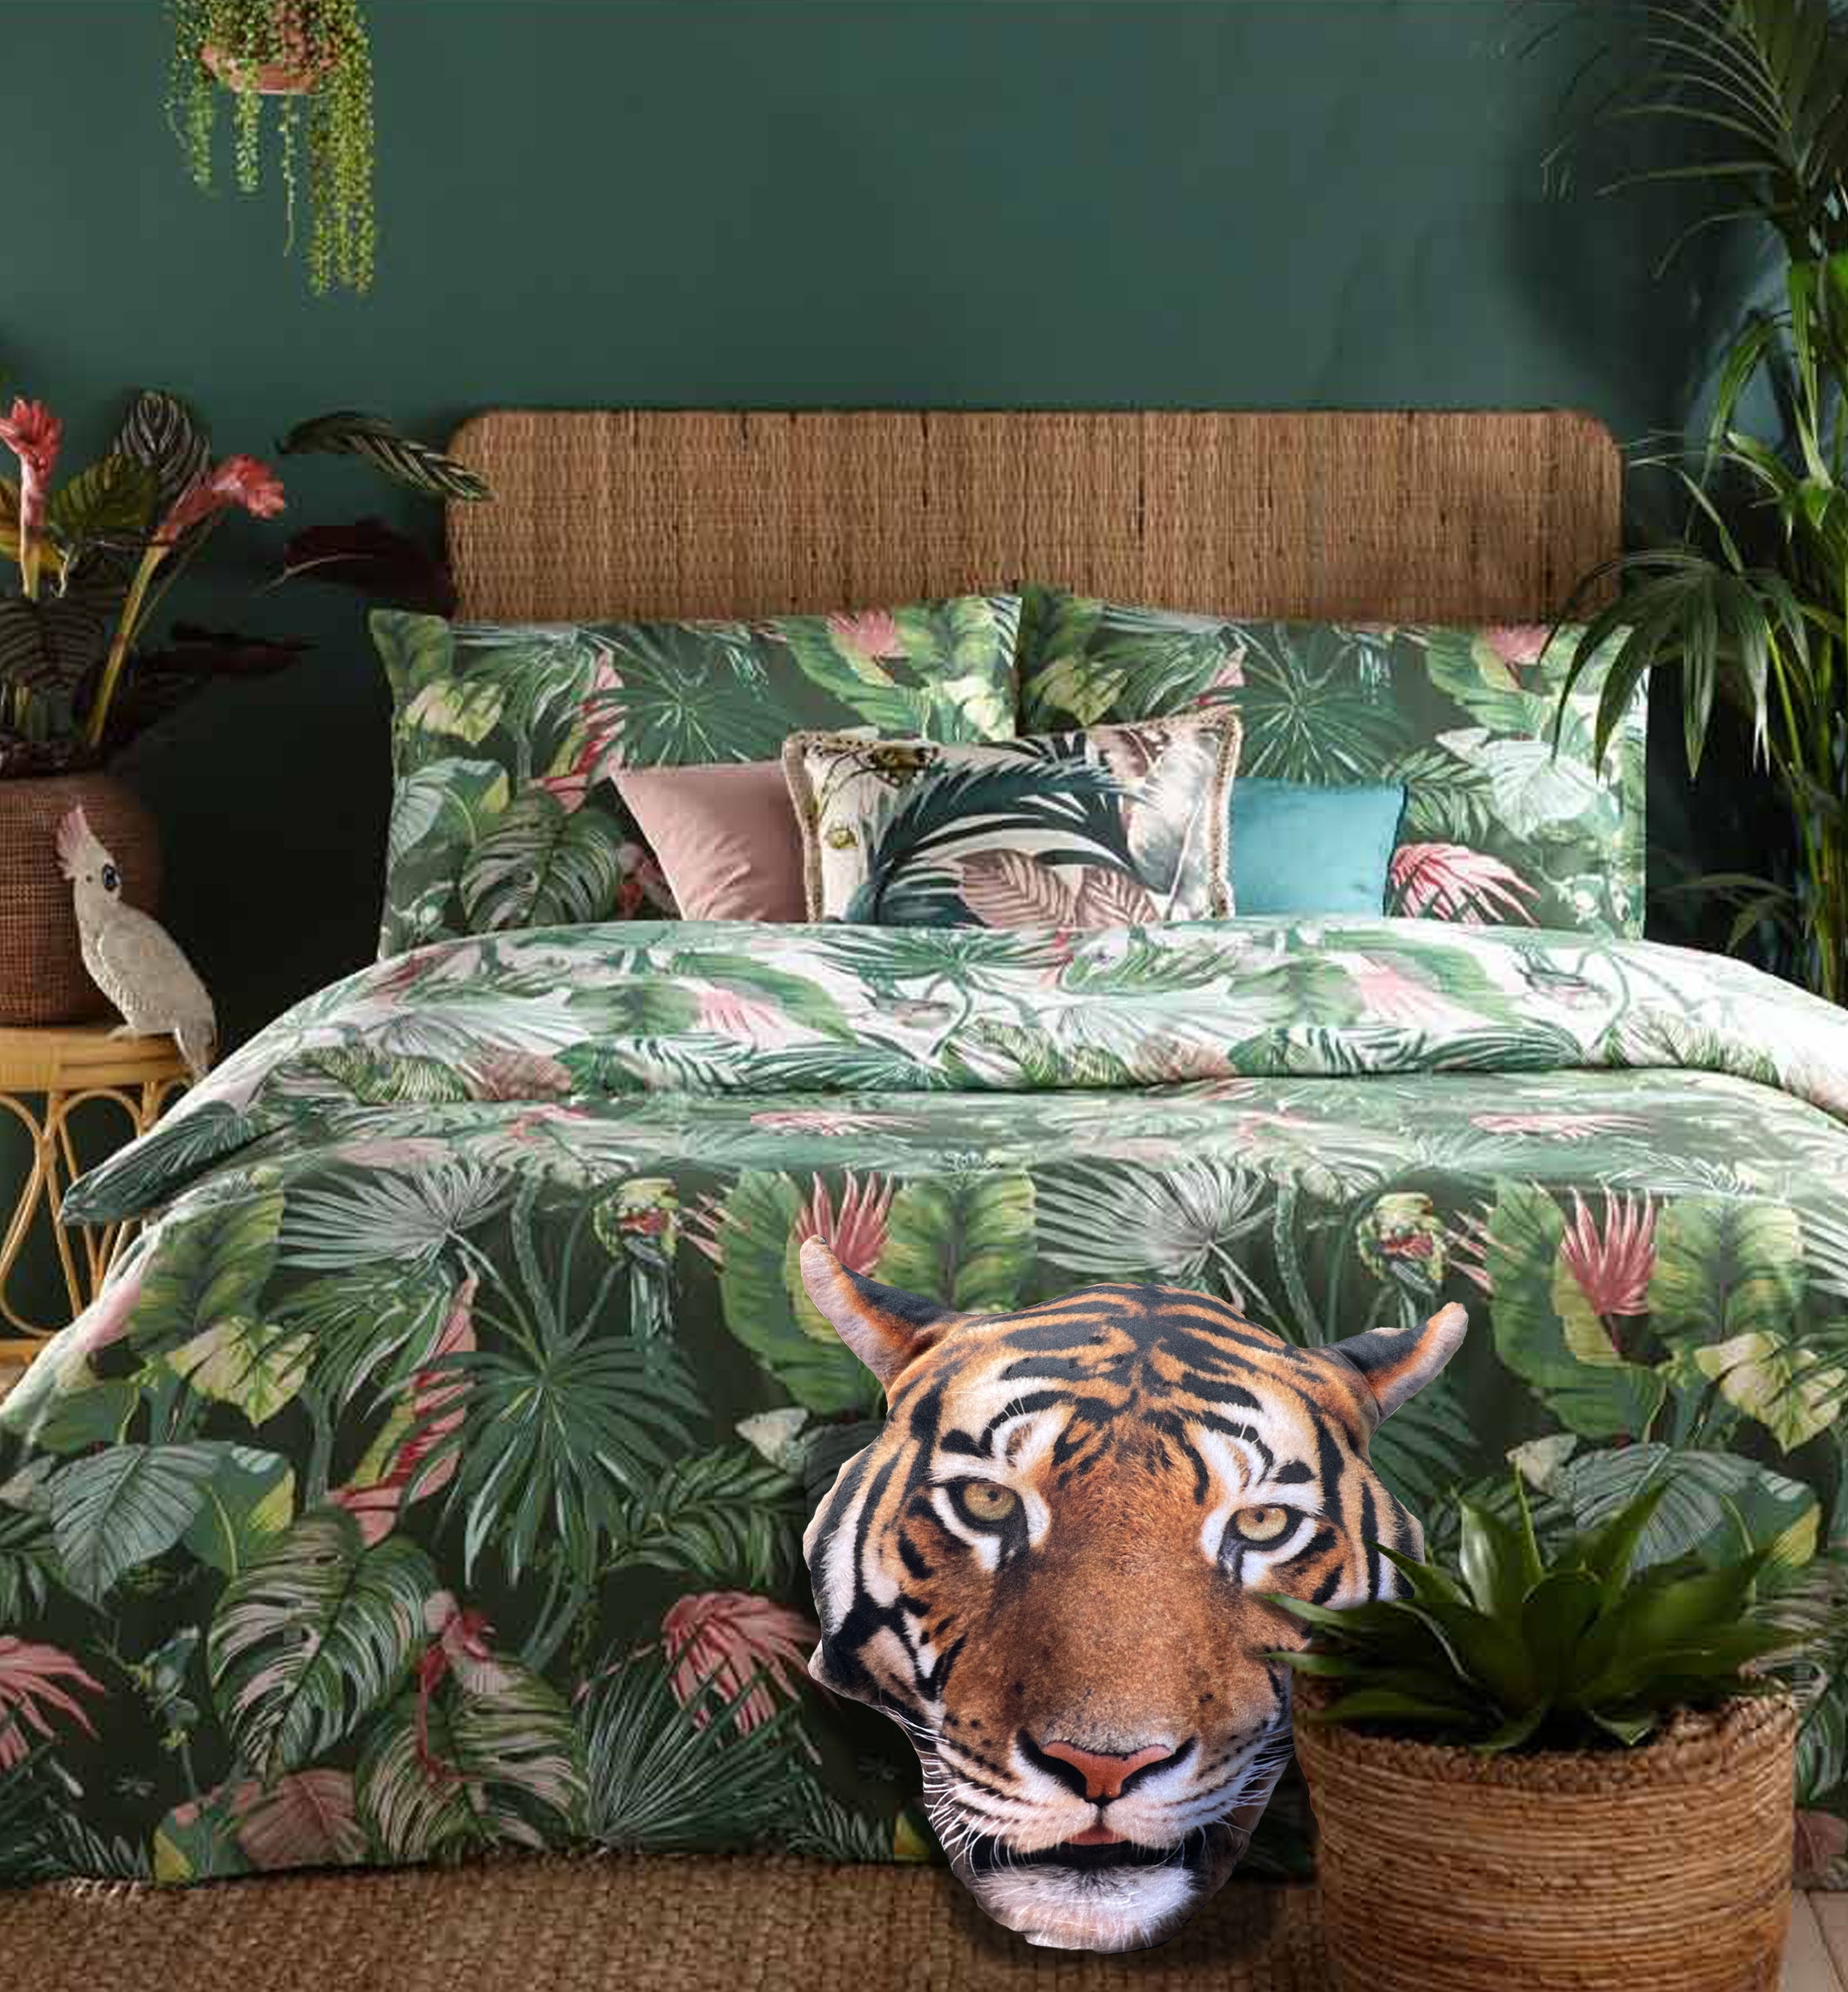 Tiger cushion, realistic Tiger face cushion, gifts for animal lovers, gifts for Tiger lovers, animal teddy, Tiger cushion, animal face cushion, Tiger sofa cushion, Tiger print design, Tiger playroom cushion